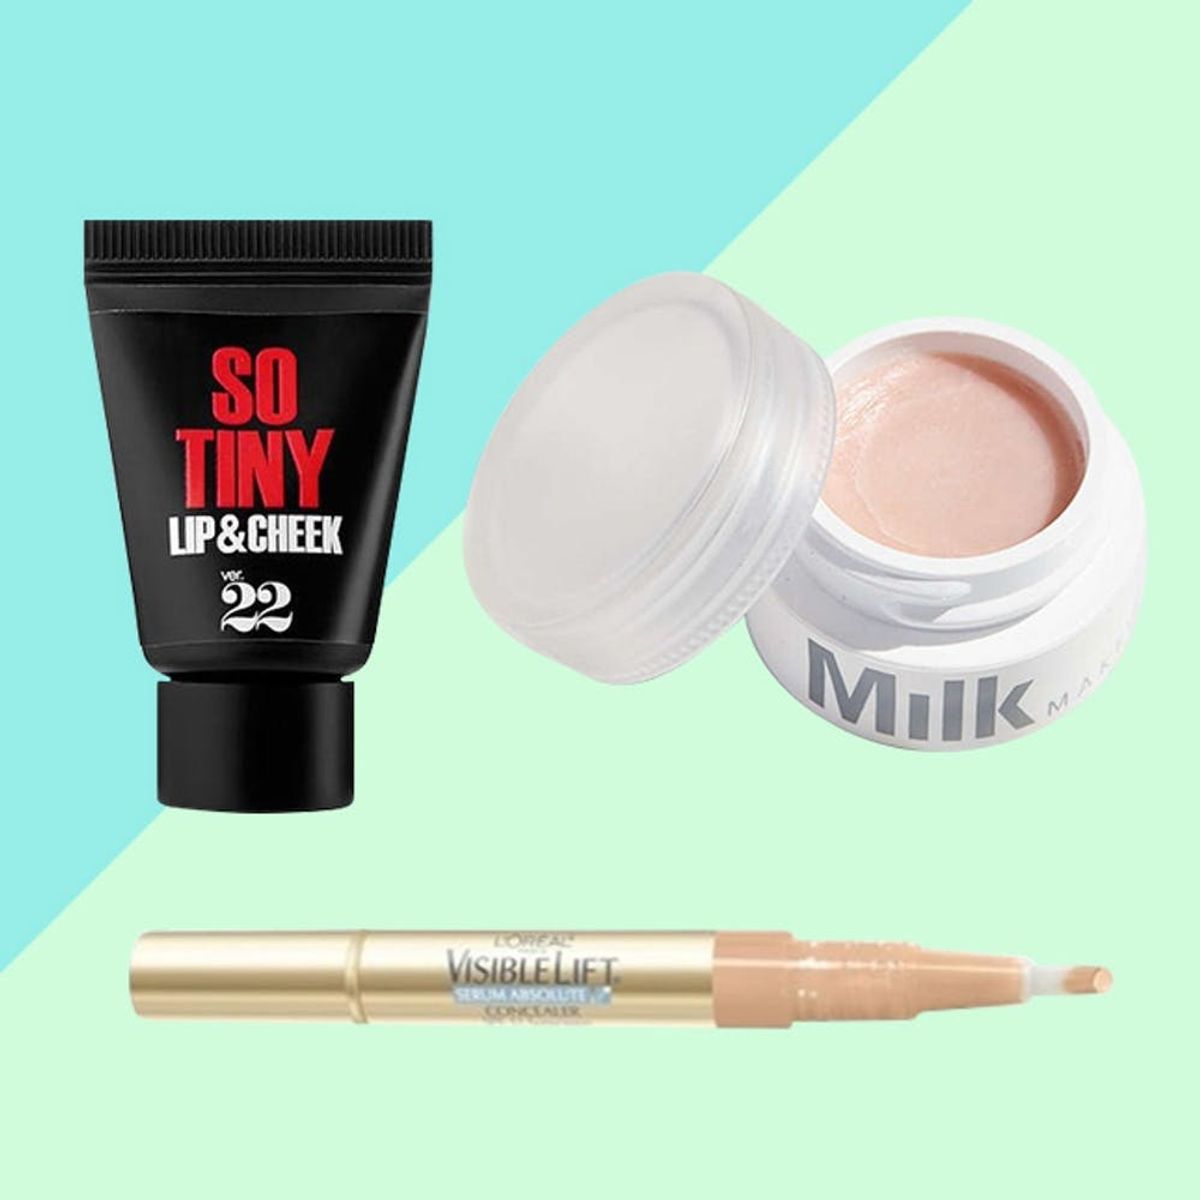 6 Weekend Makeup Essentials for Under $15